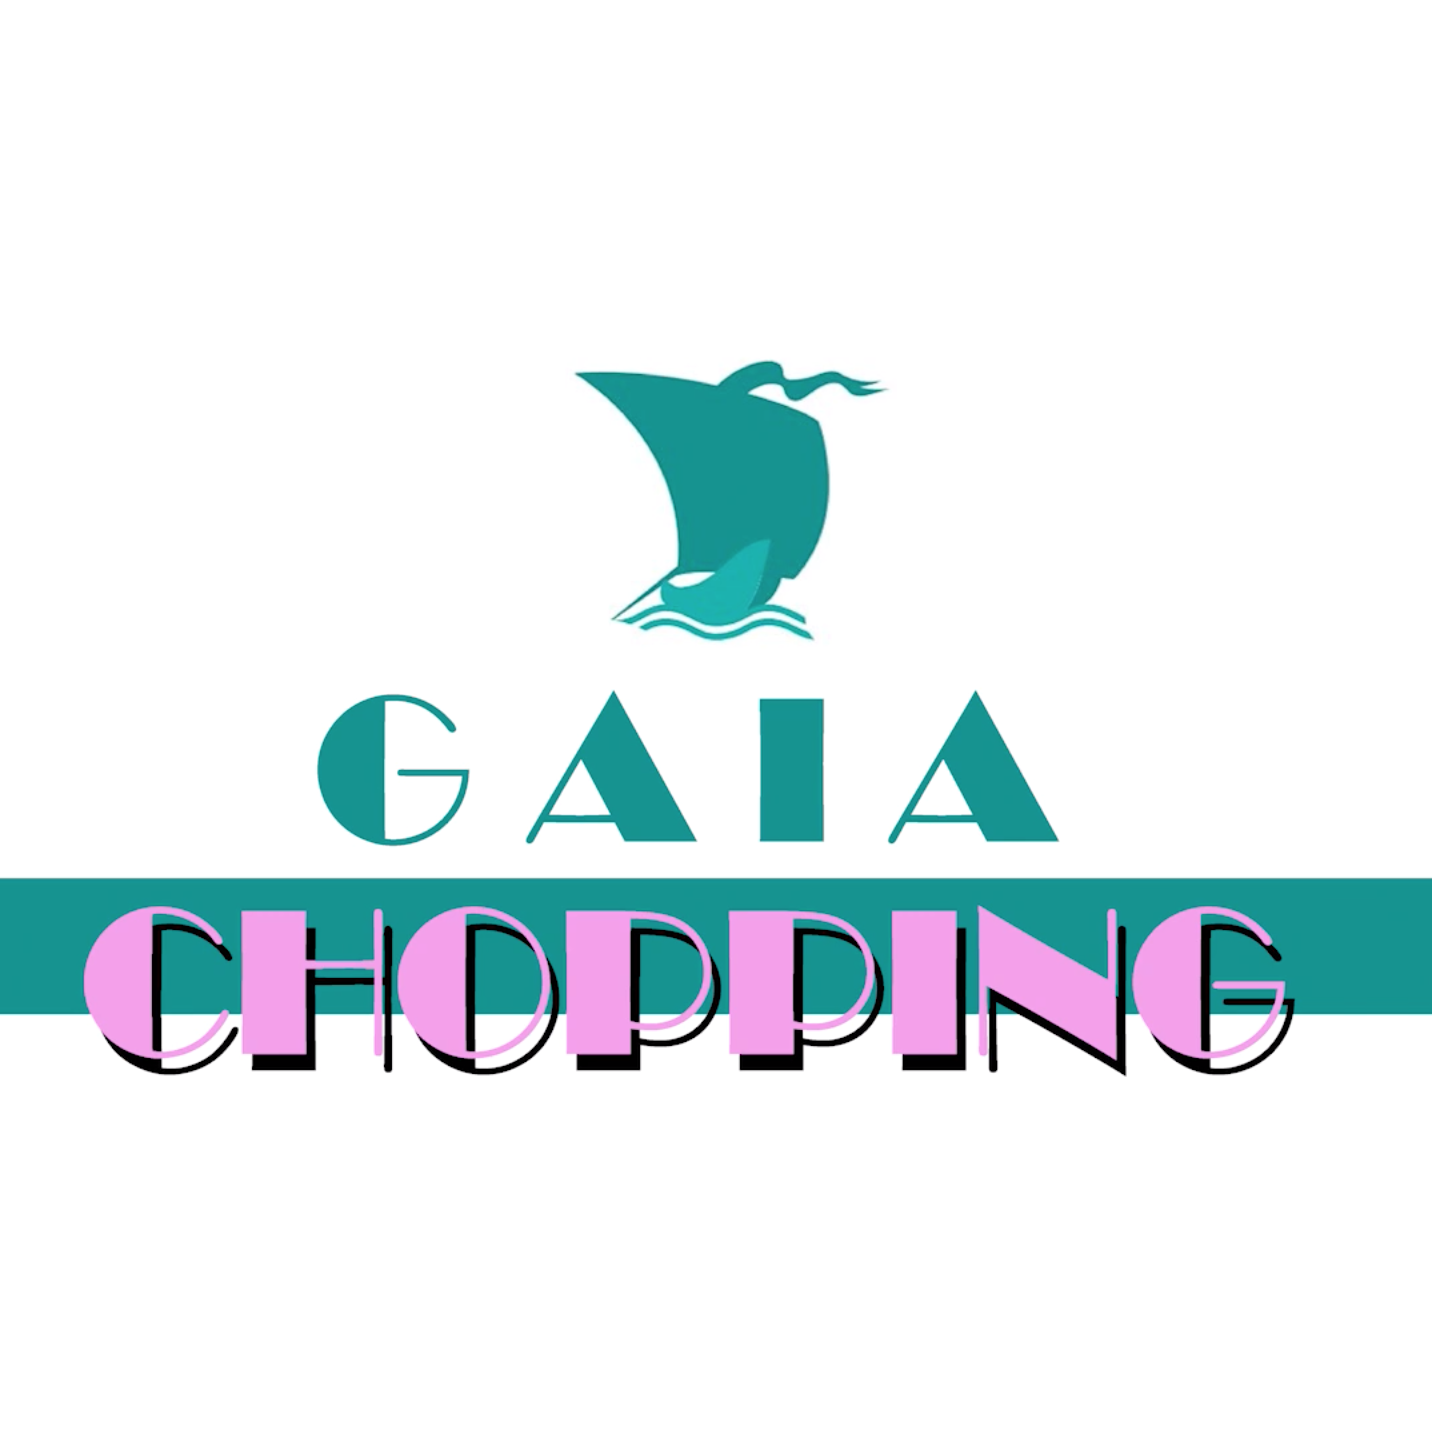 71. David Bruno - ep GaiaChopping